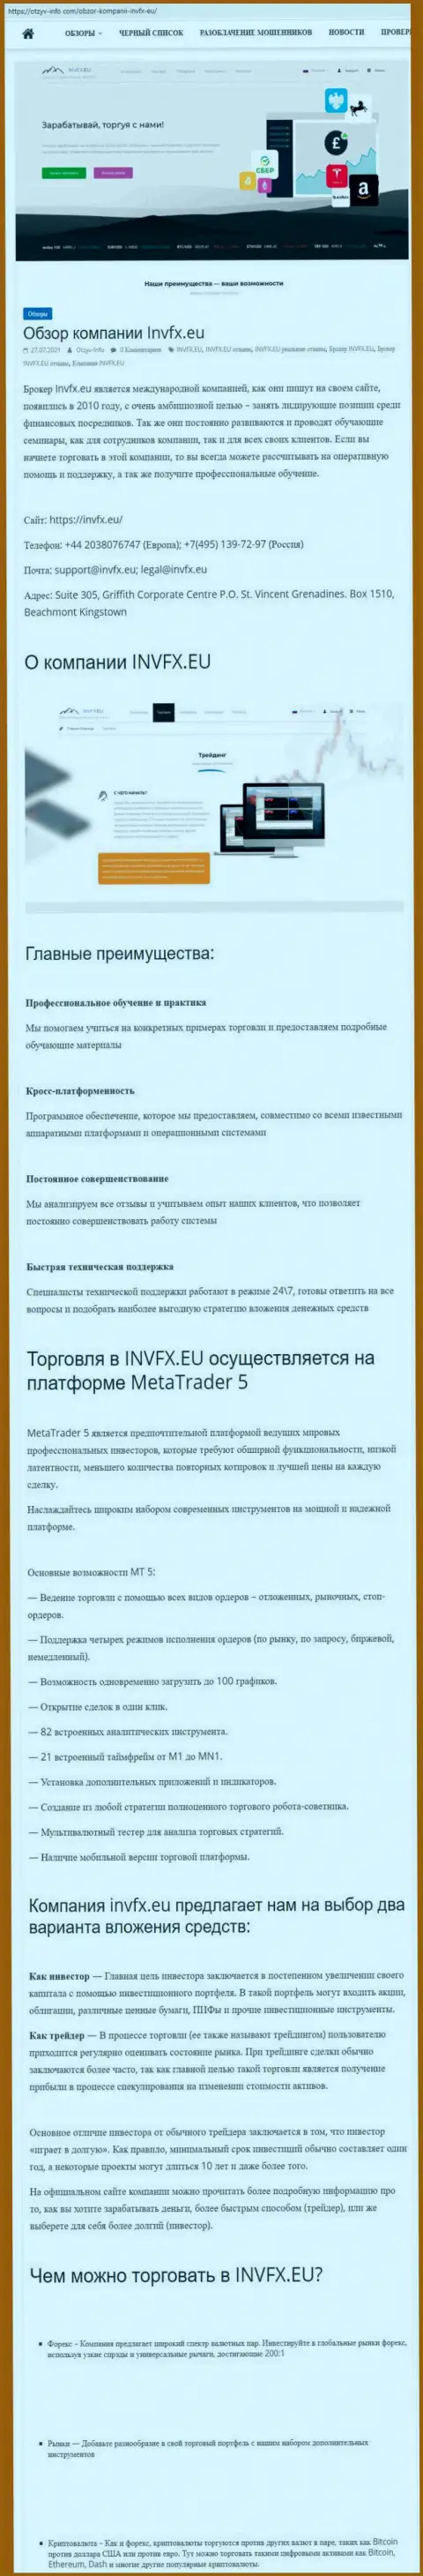 Веб-сервис otzyv-info com опубликовал статью об ФОРЕКС-компании Invesco Limited